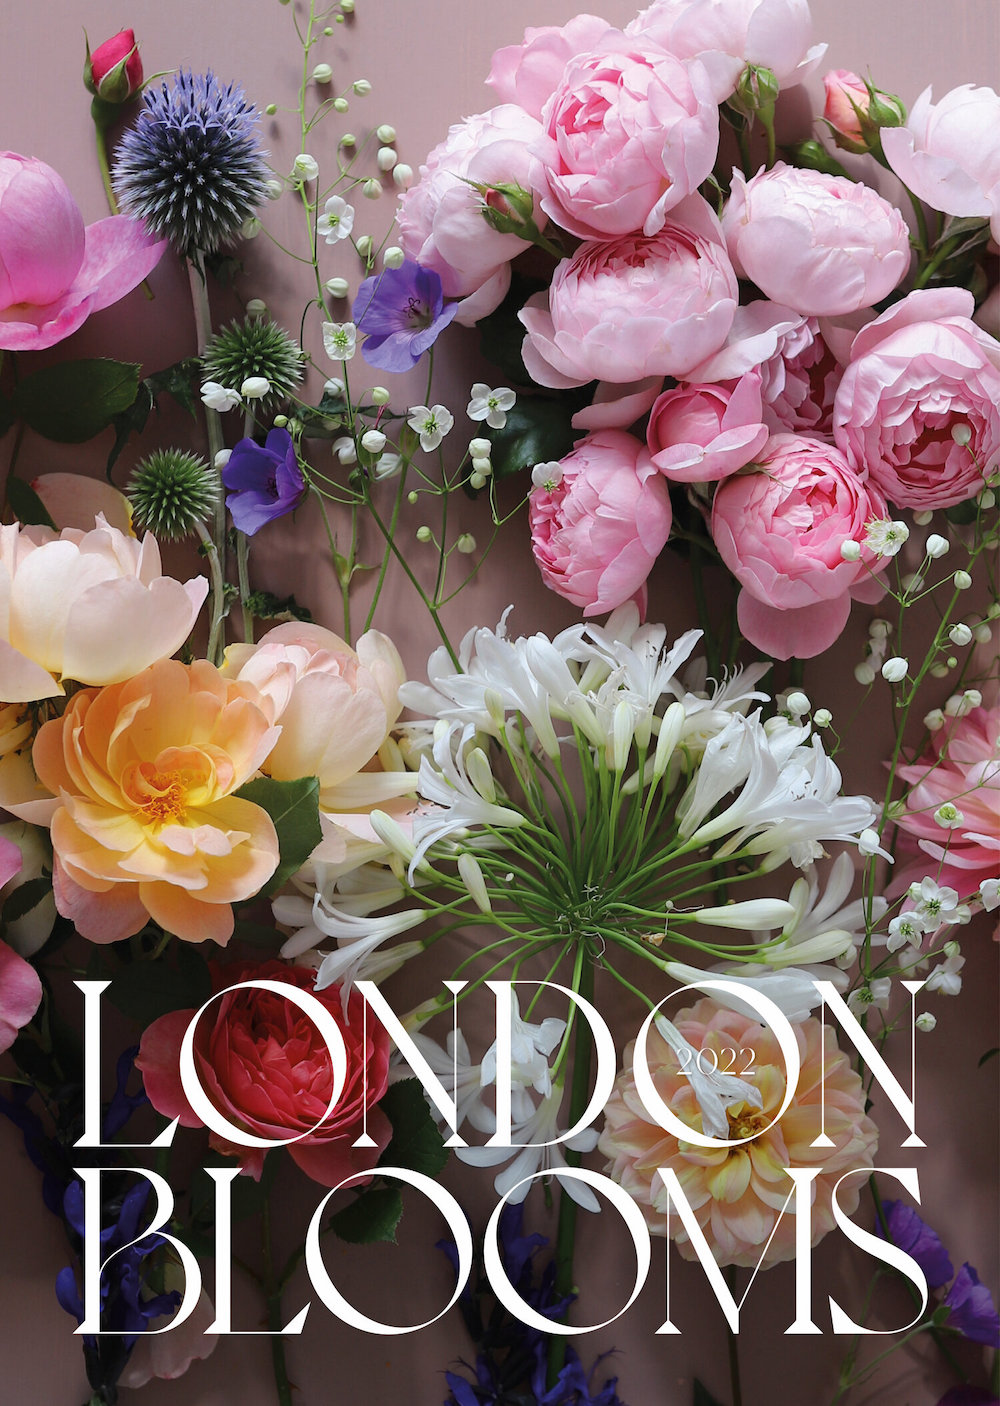 London Blooms Turns Her Garden Into a Botanical Calendar for 2022